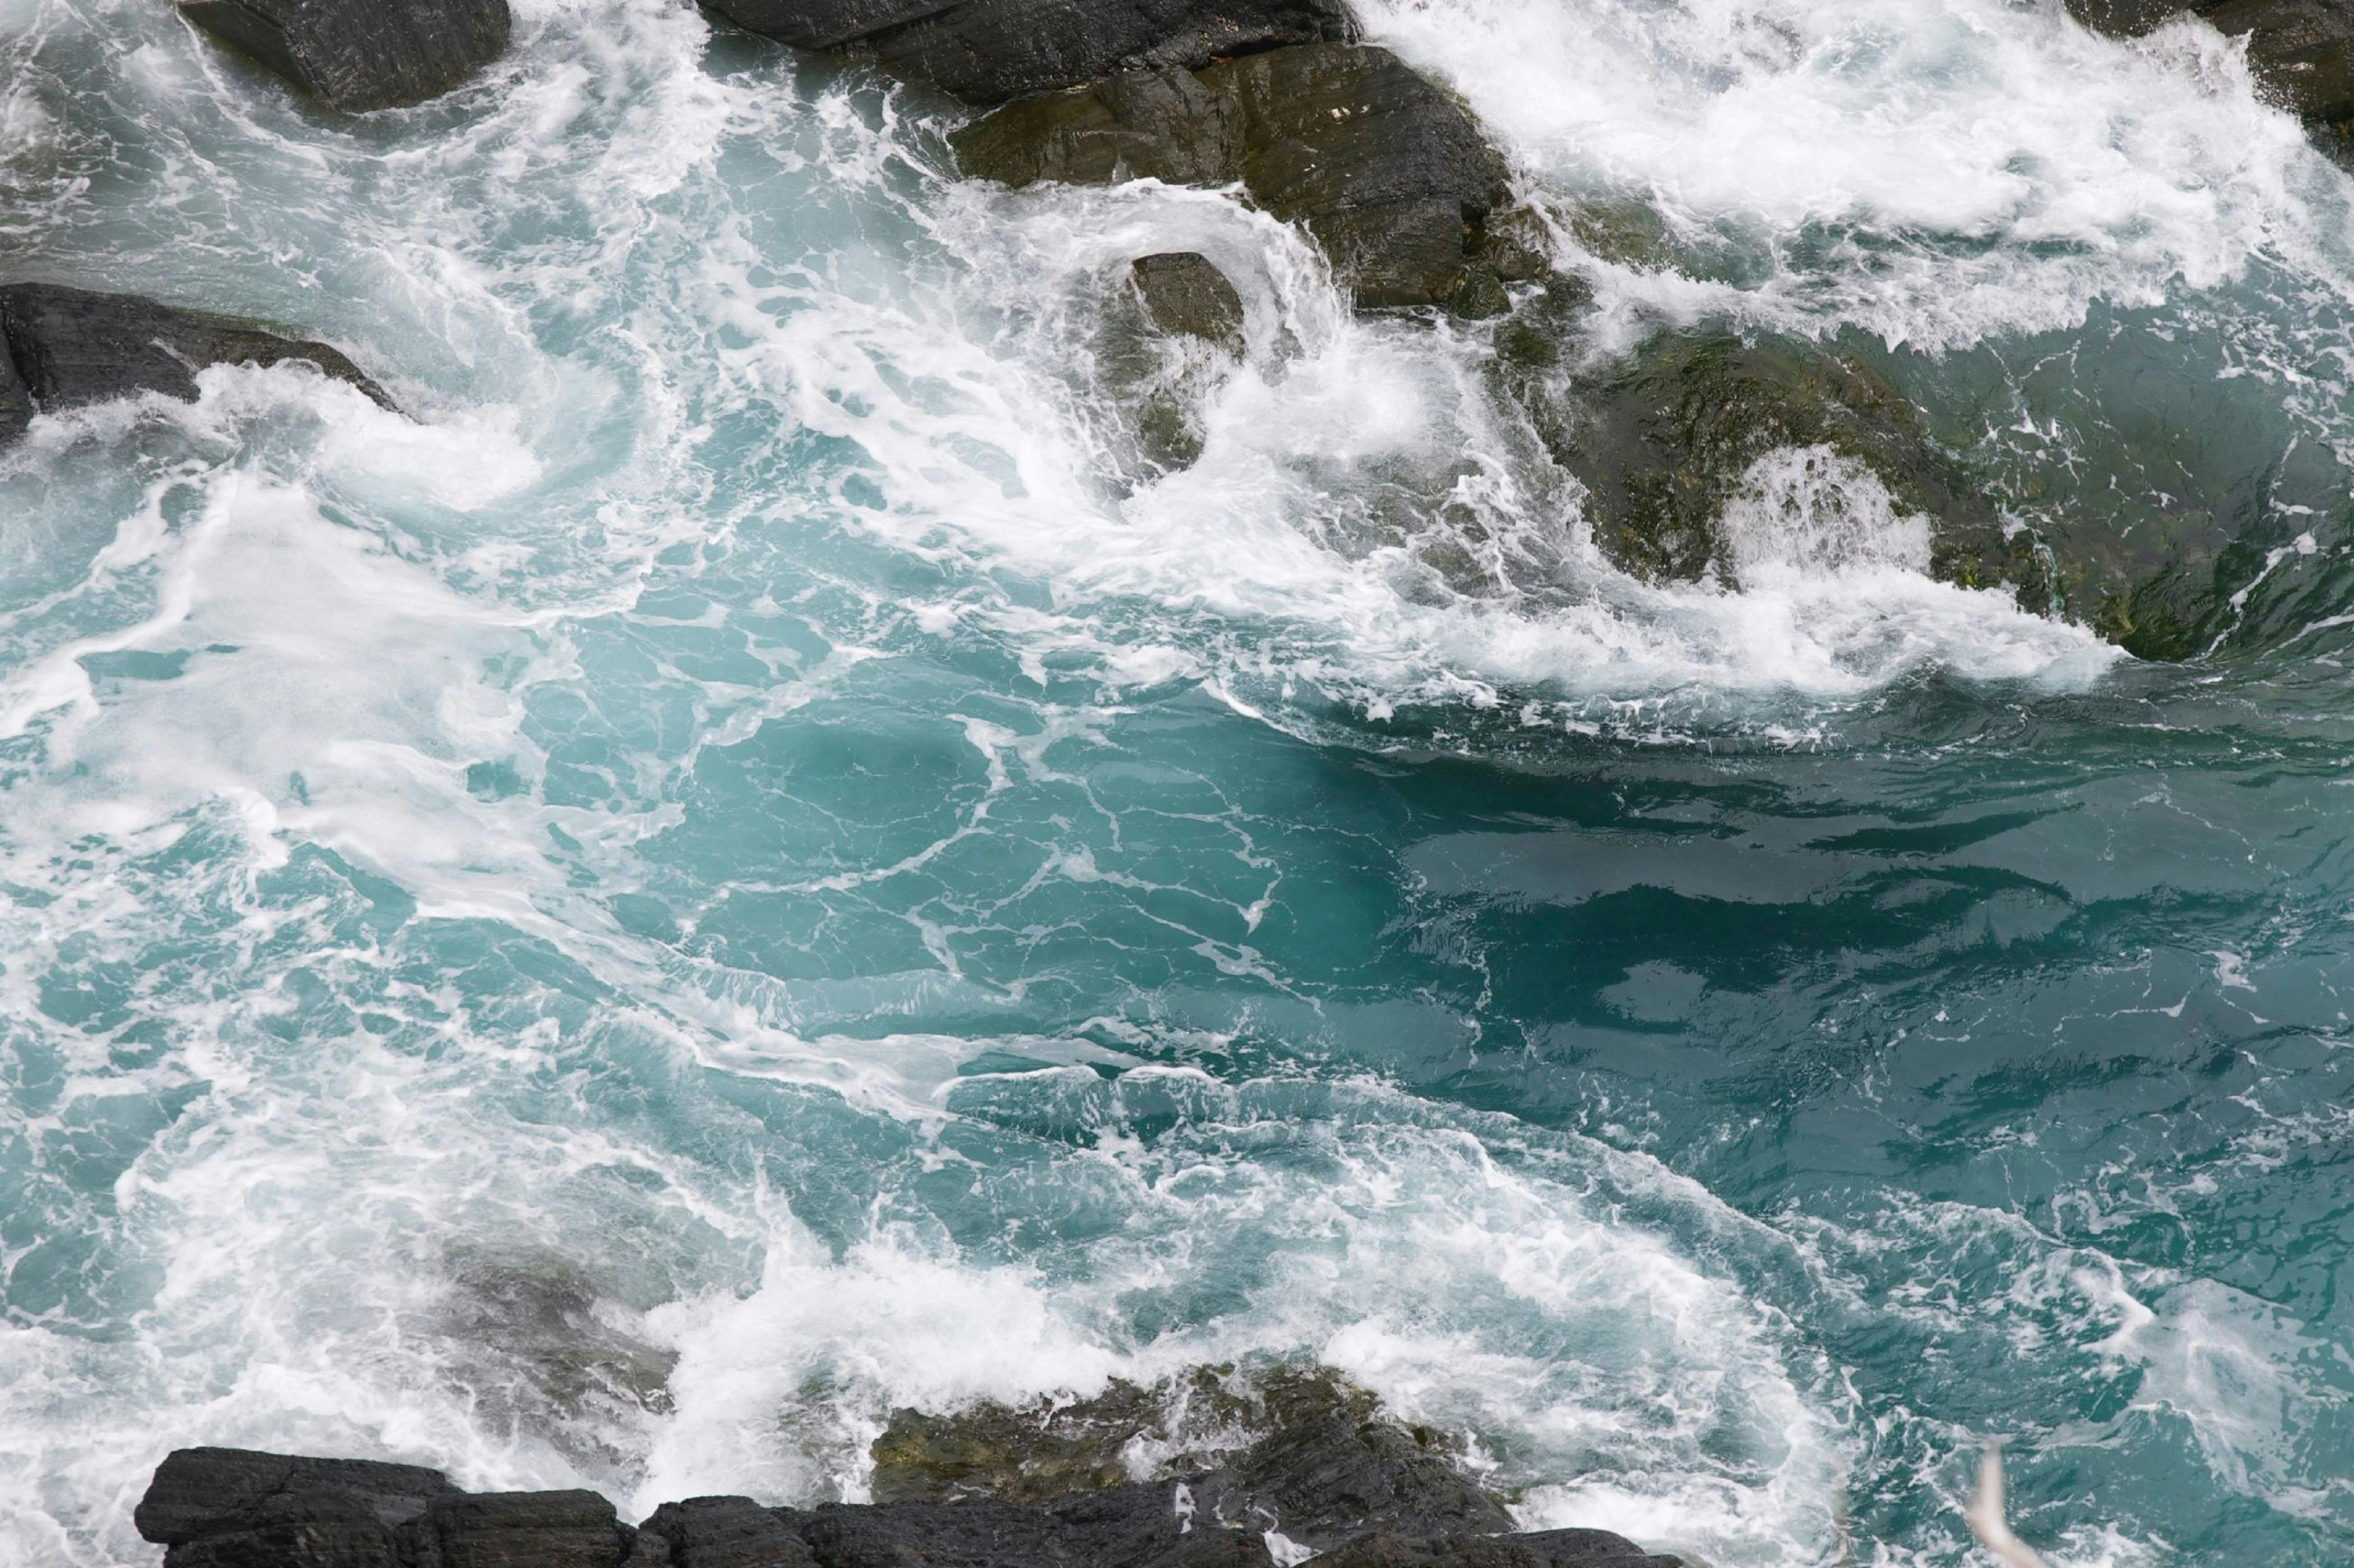 pictures of ocean waves crashing on rocks